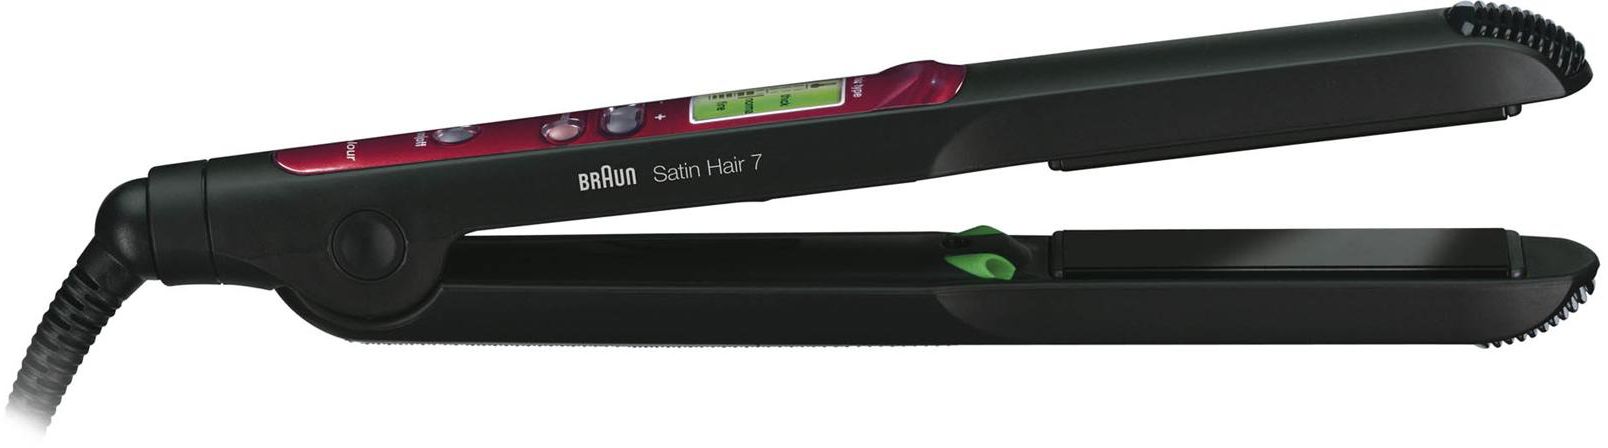 Braun Satin Hair 7 Hair Straightener, Black/Red - ST750